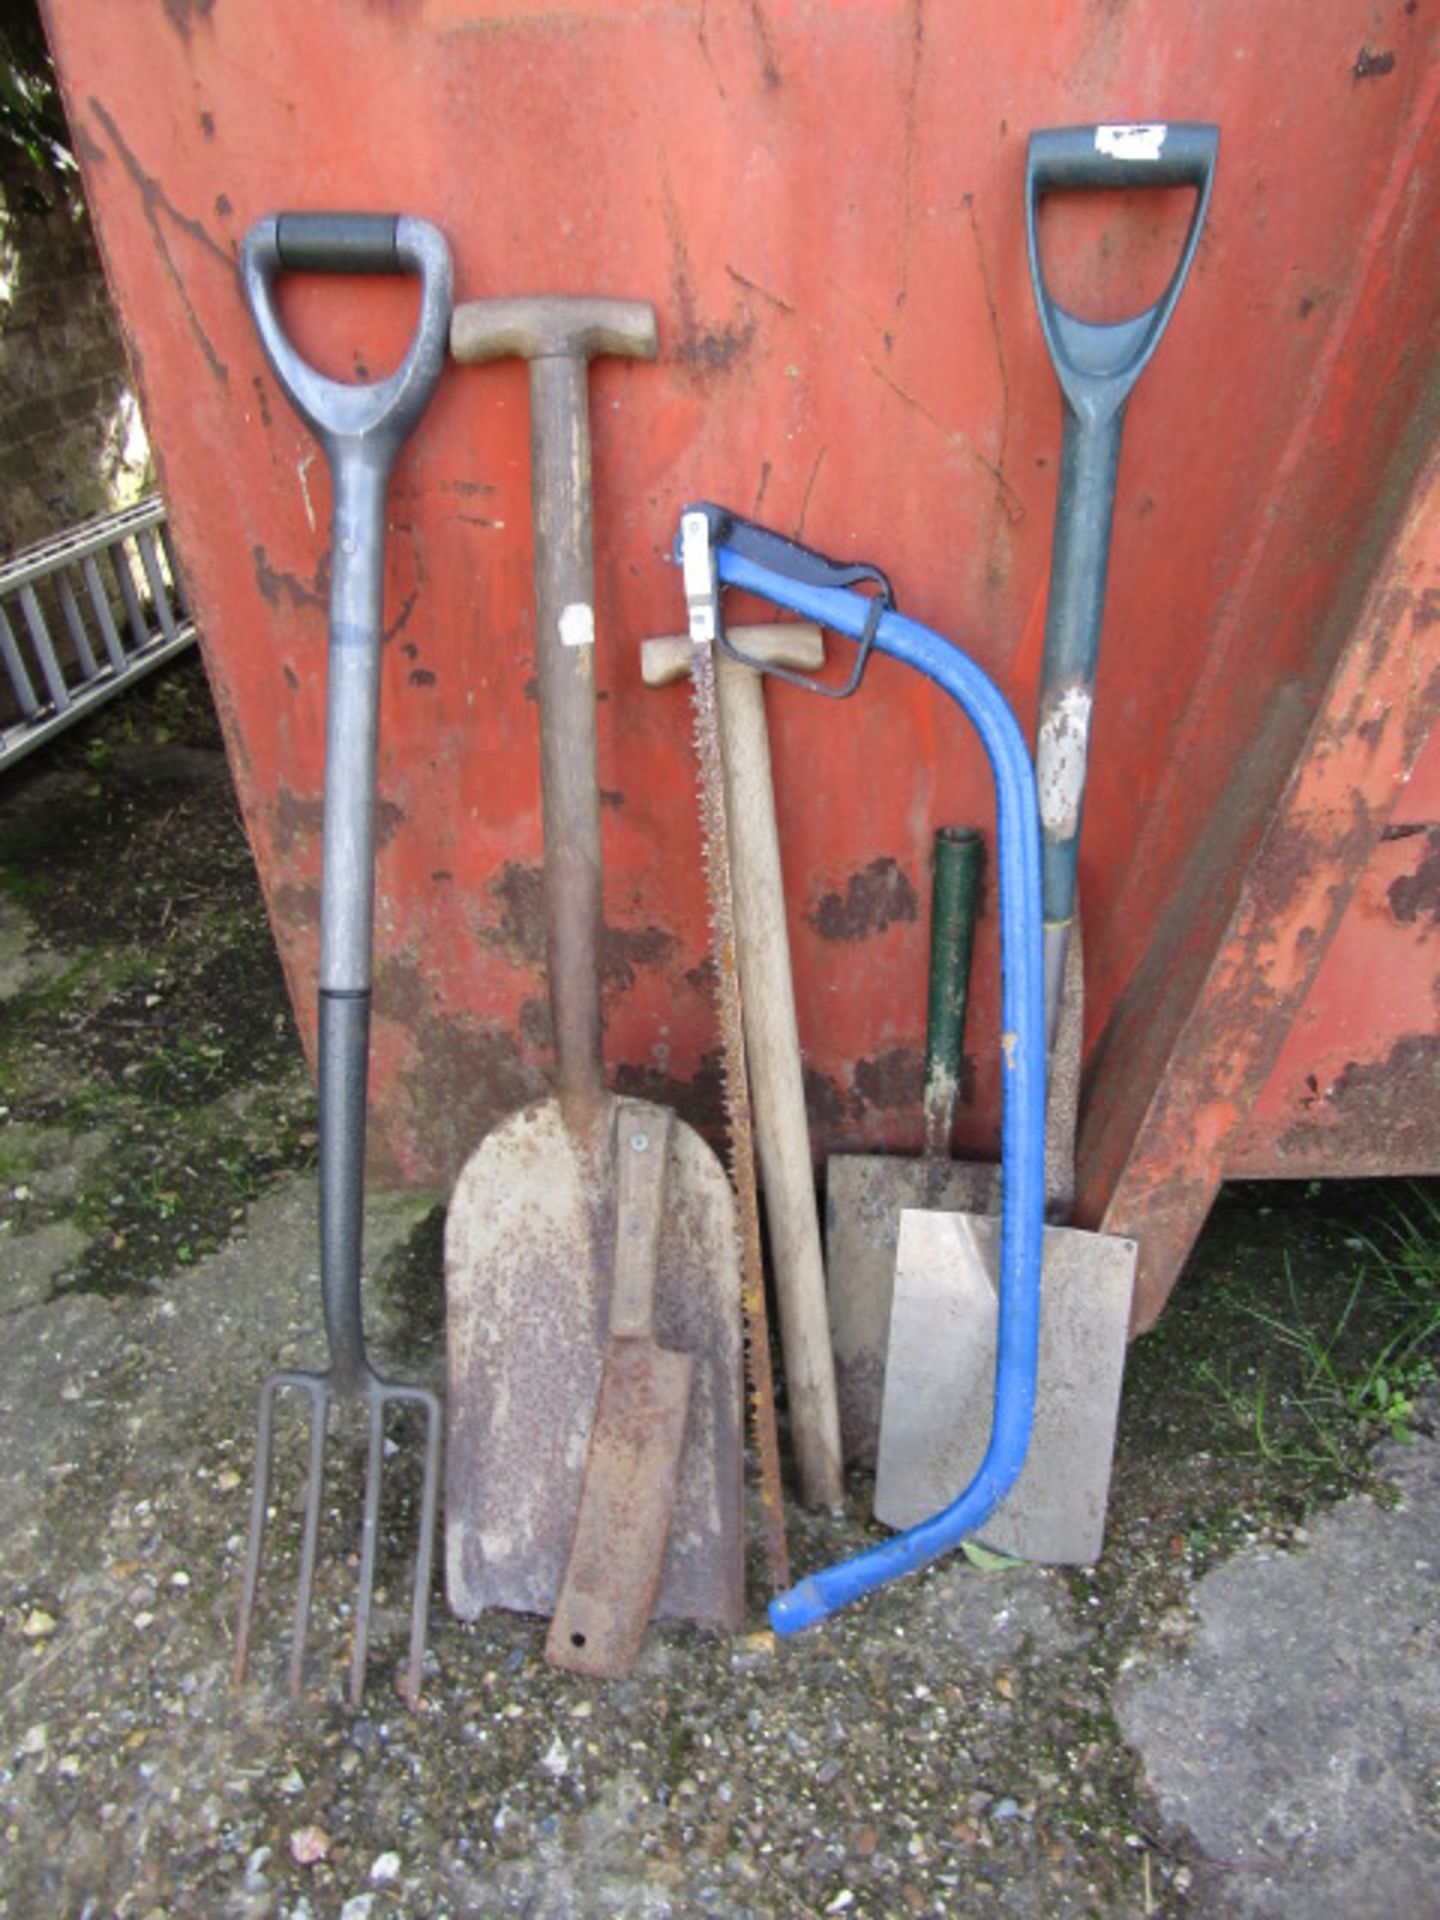 Various garden tools